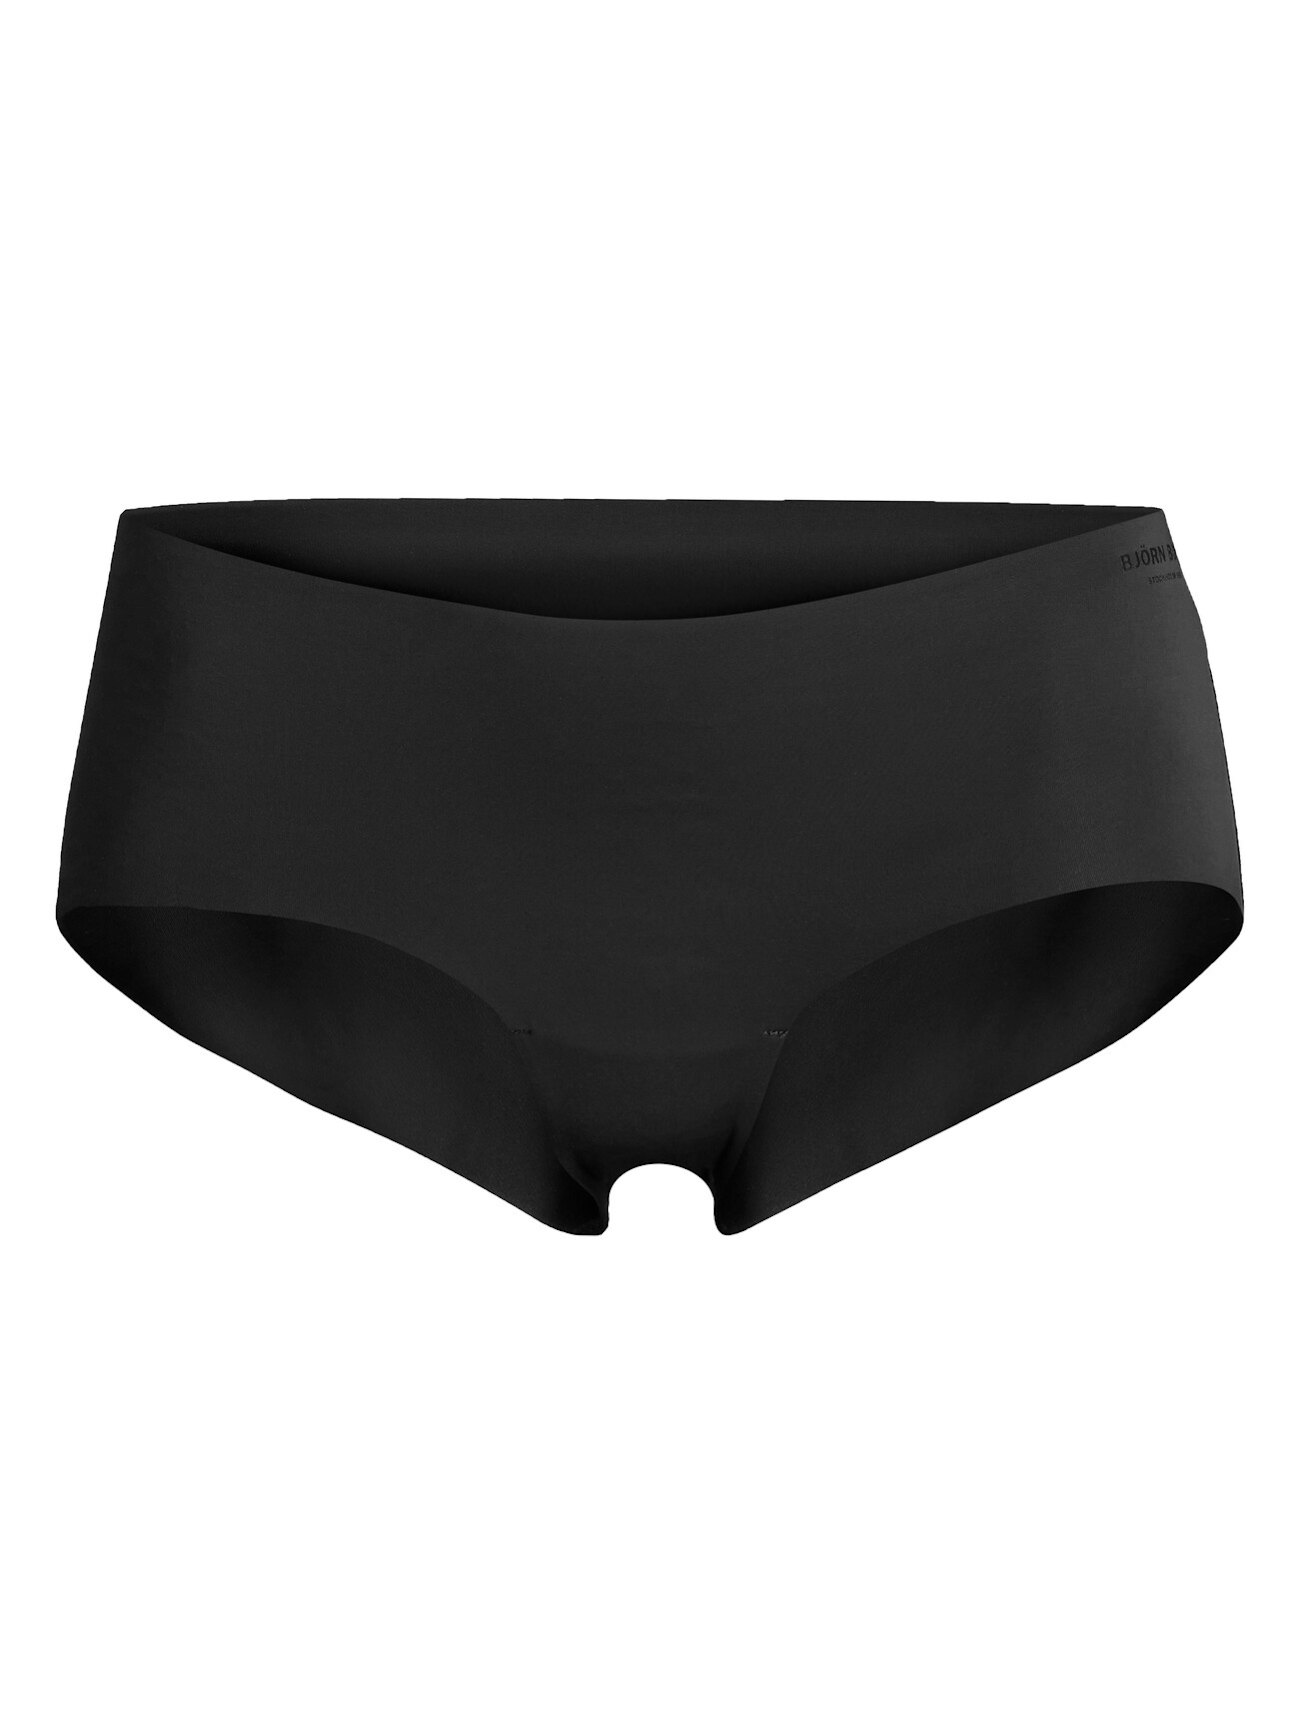 NEW Girls brand name calvin kline cotton panties underwear size 7/8